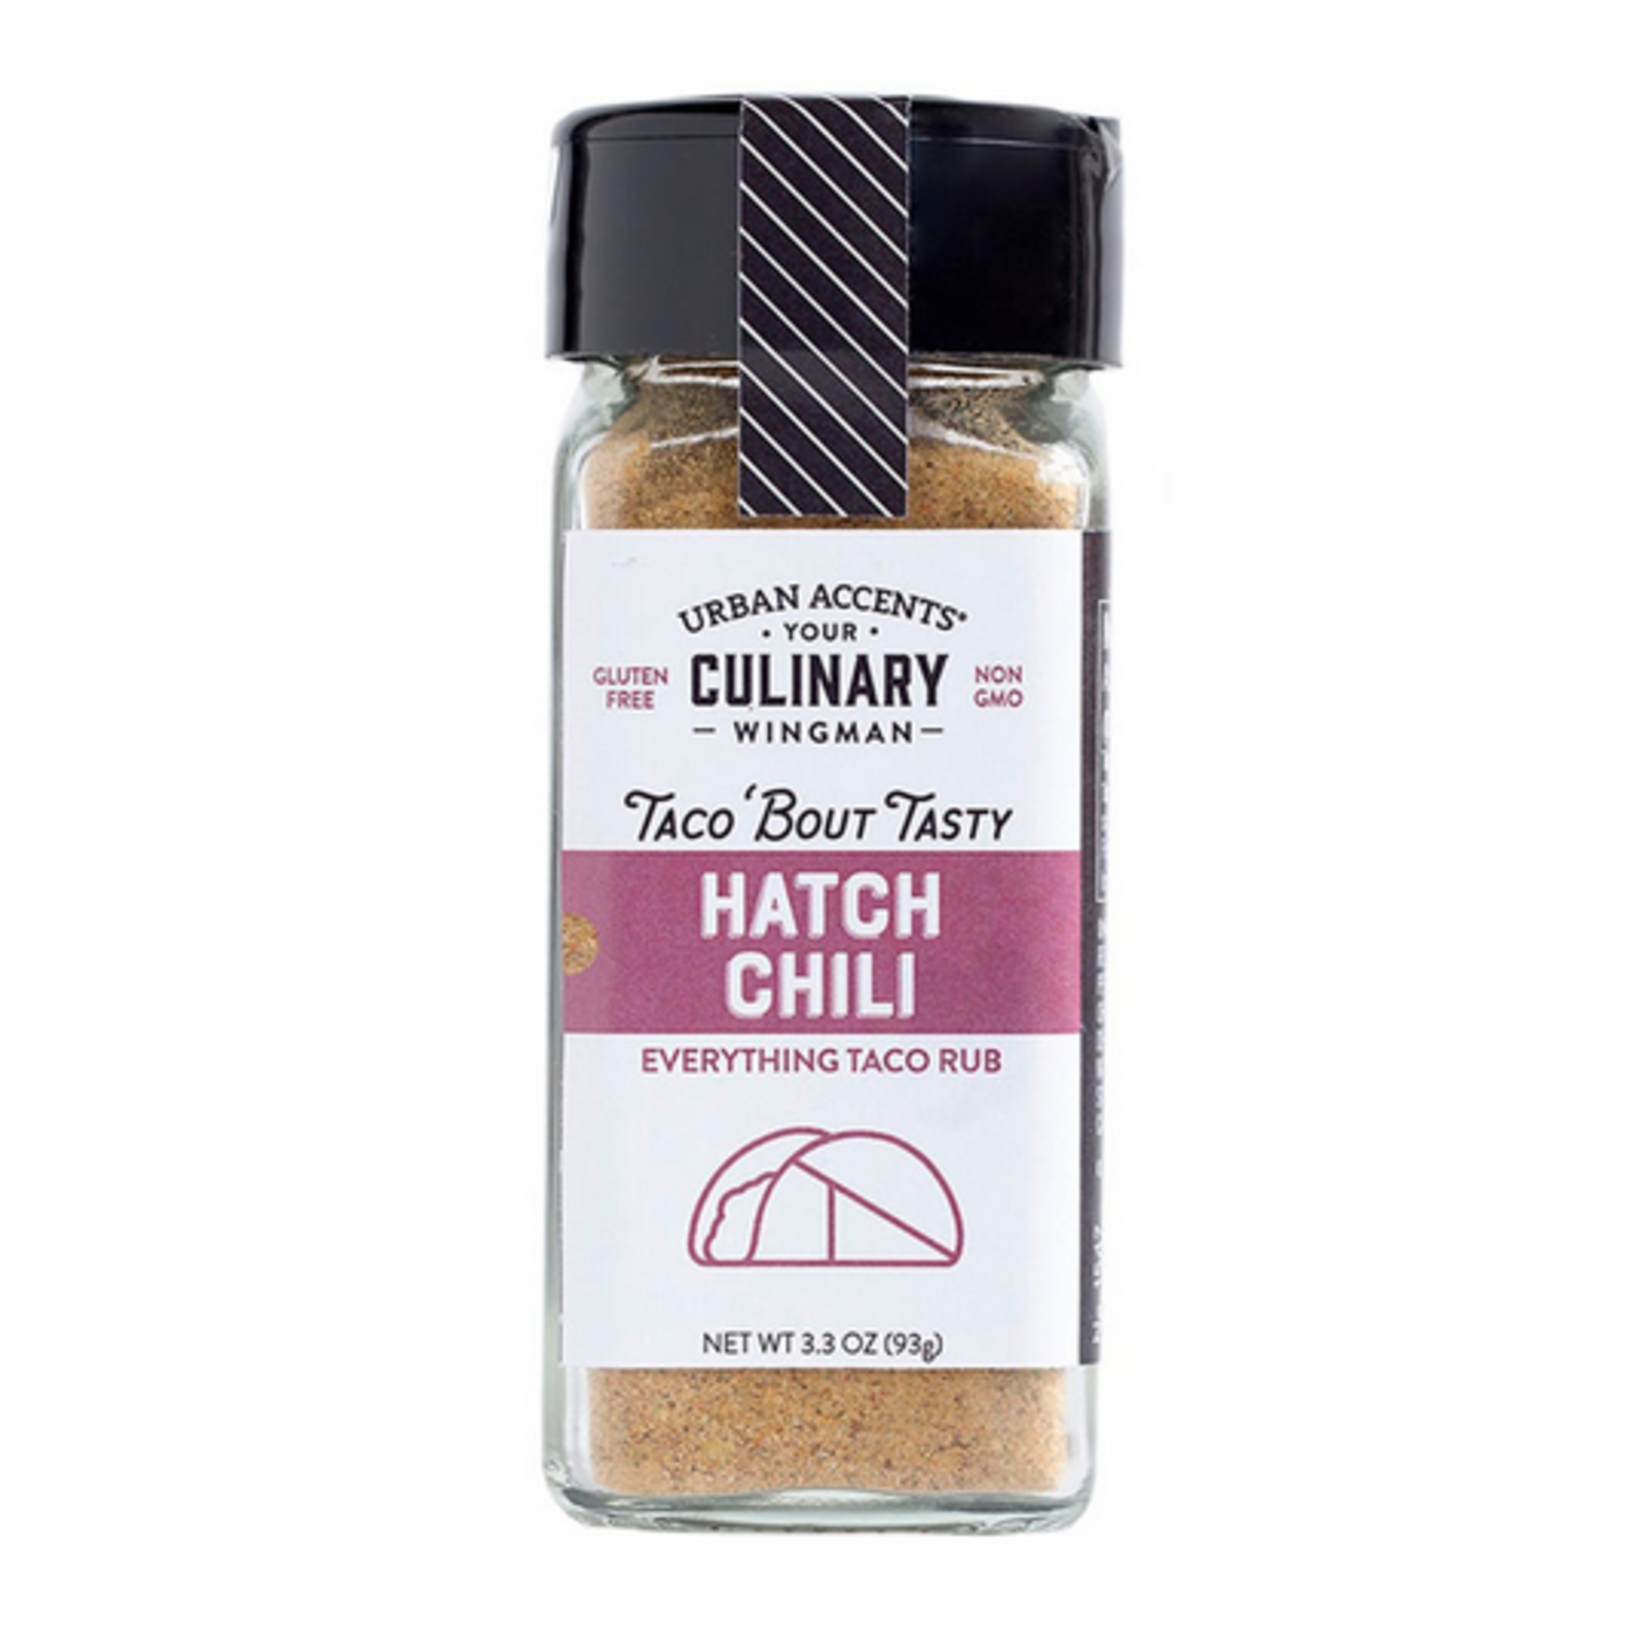 Urban Accents Culinary Wingman Hatch Chili Taco Rub